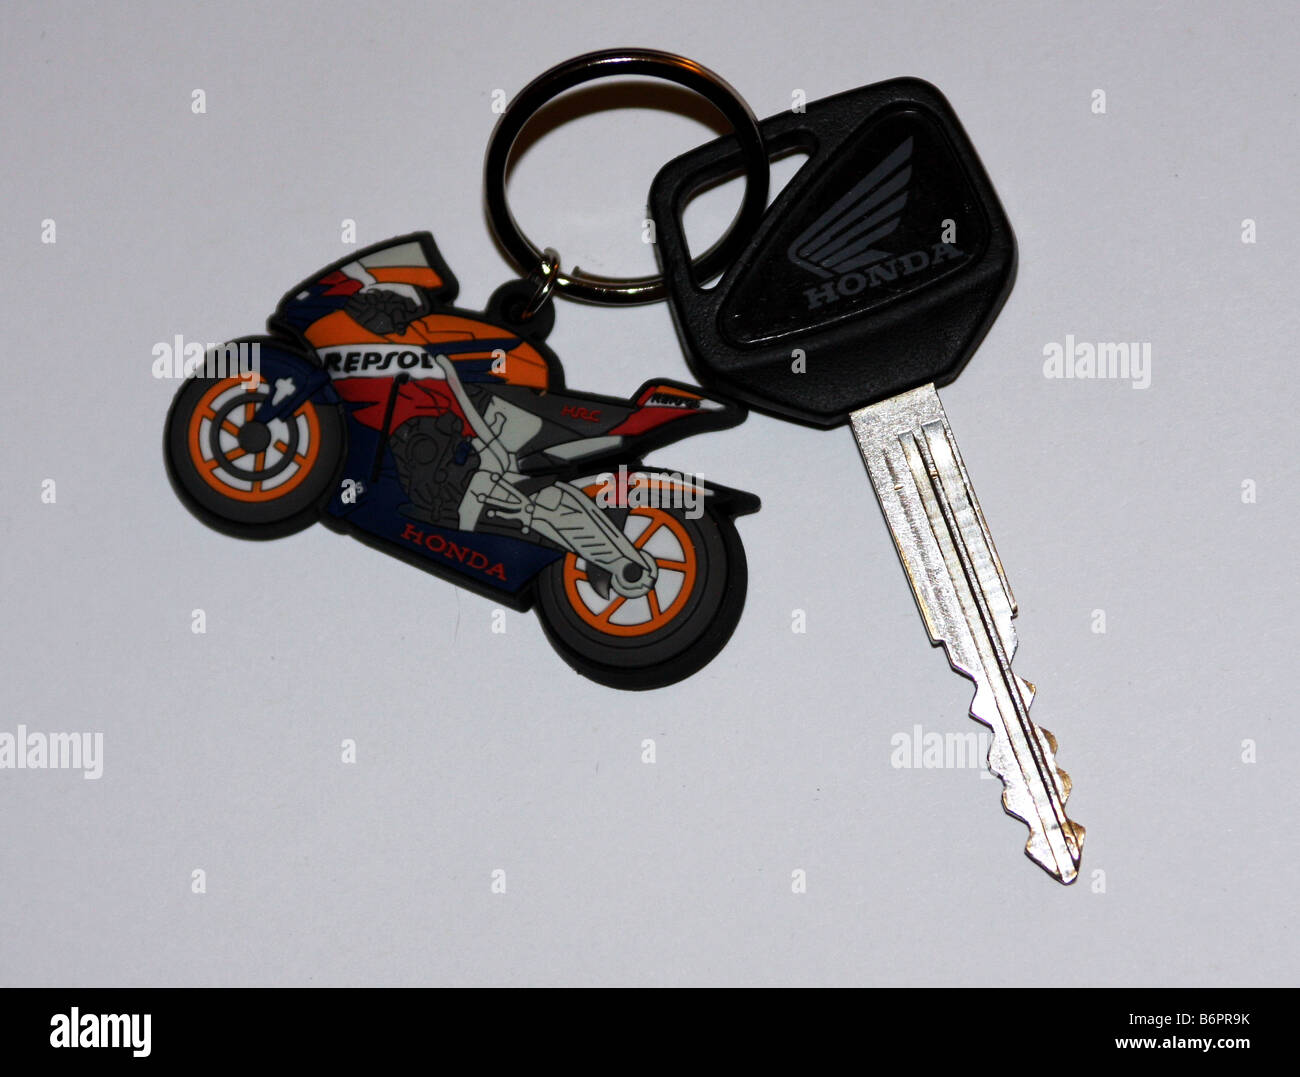 motogp Honda Repsol motorcycle Keyring attached to a Honda ignition key  Stock Photo - Alamy